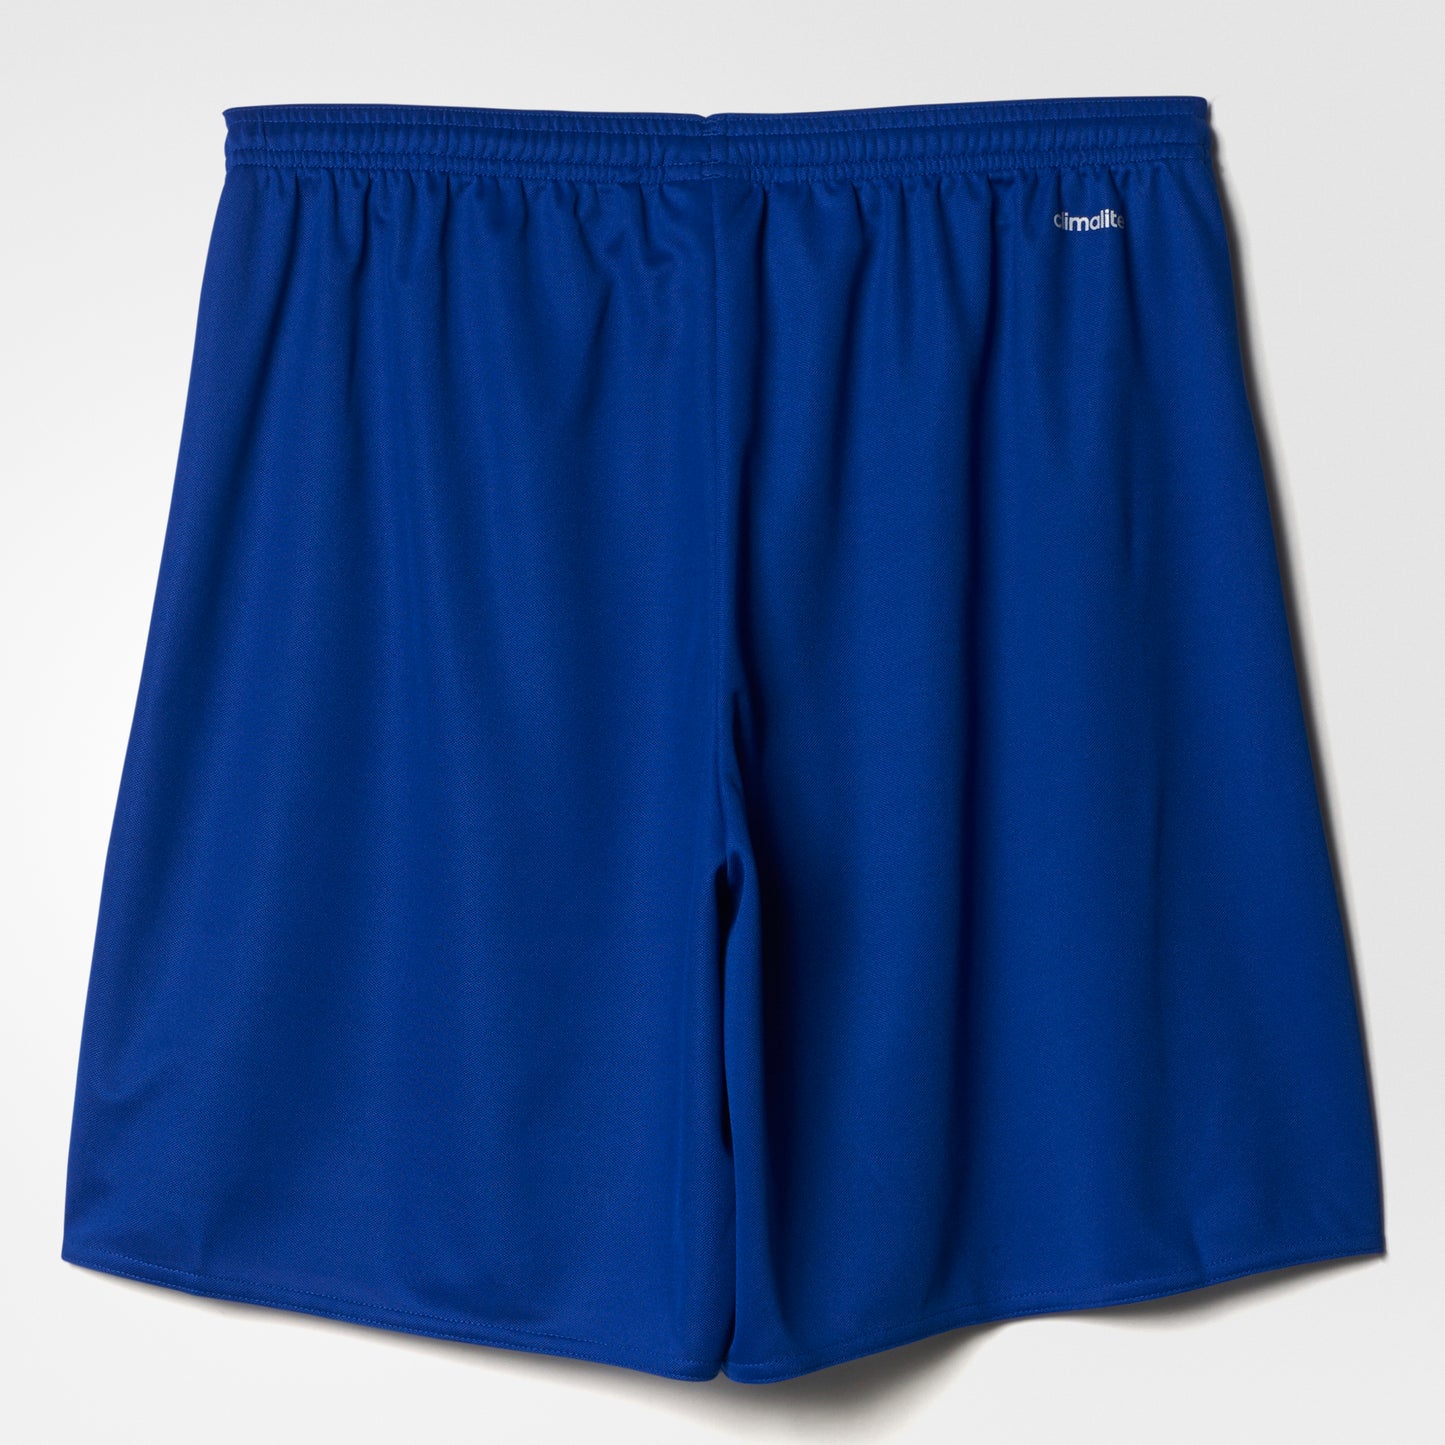 adidas PARMA 16 Shorts | Bold Blue | Men's